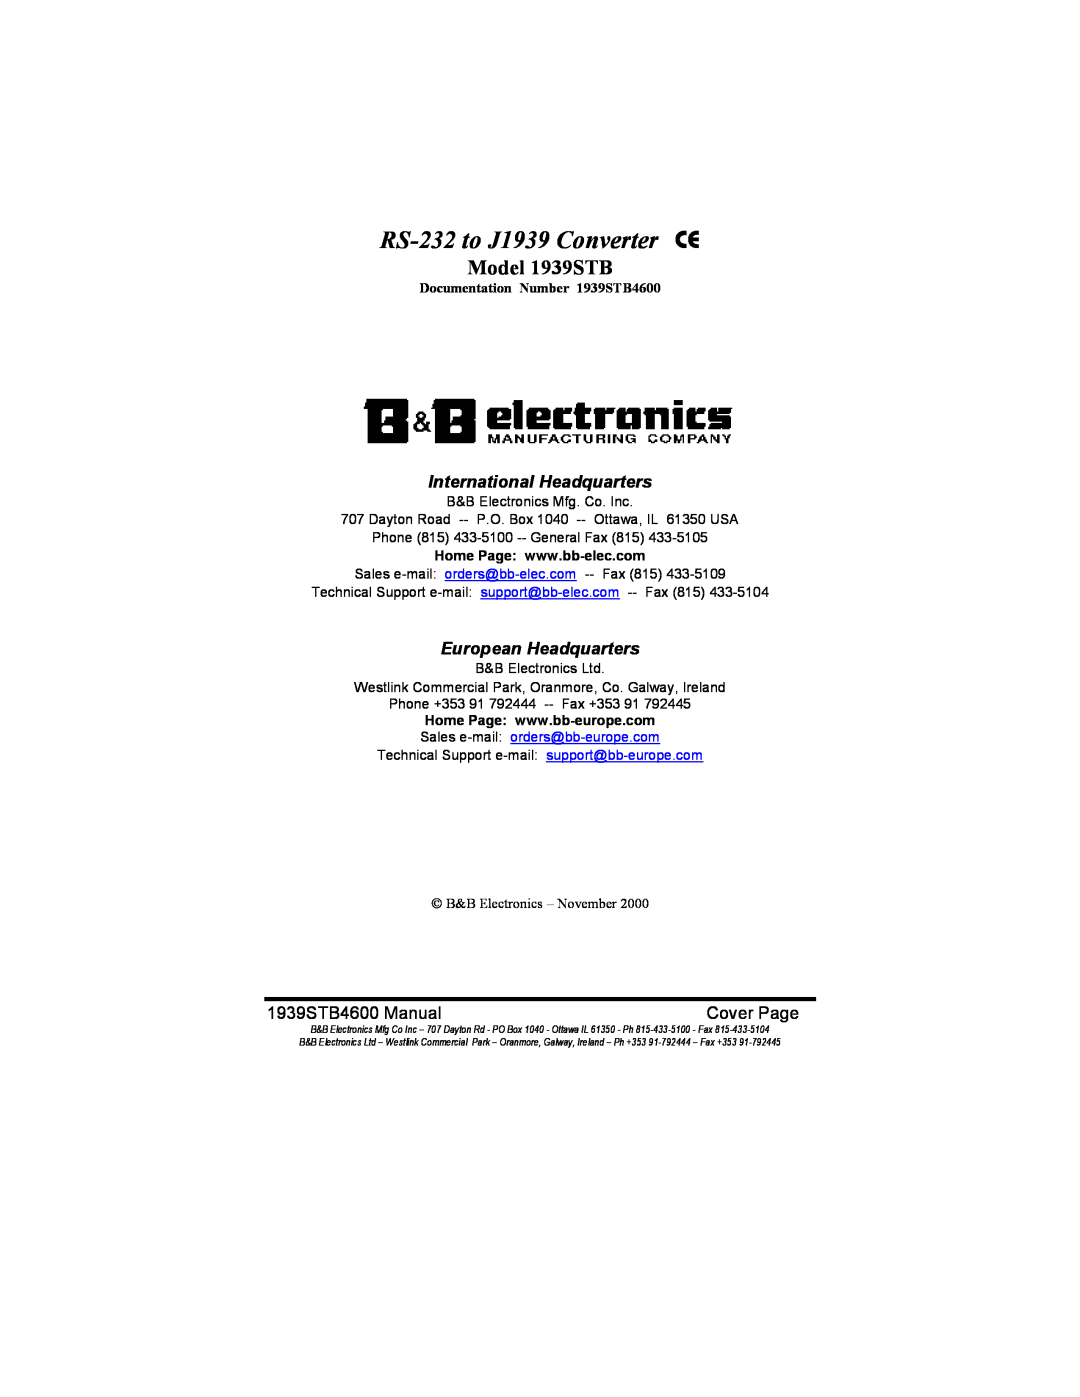 B&B Electronics manual Model 1939STB, RS-232 to J1939 Converter CE, International Headquarters, European Headquarters 